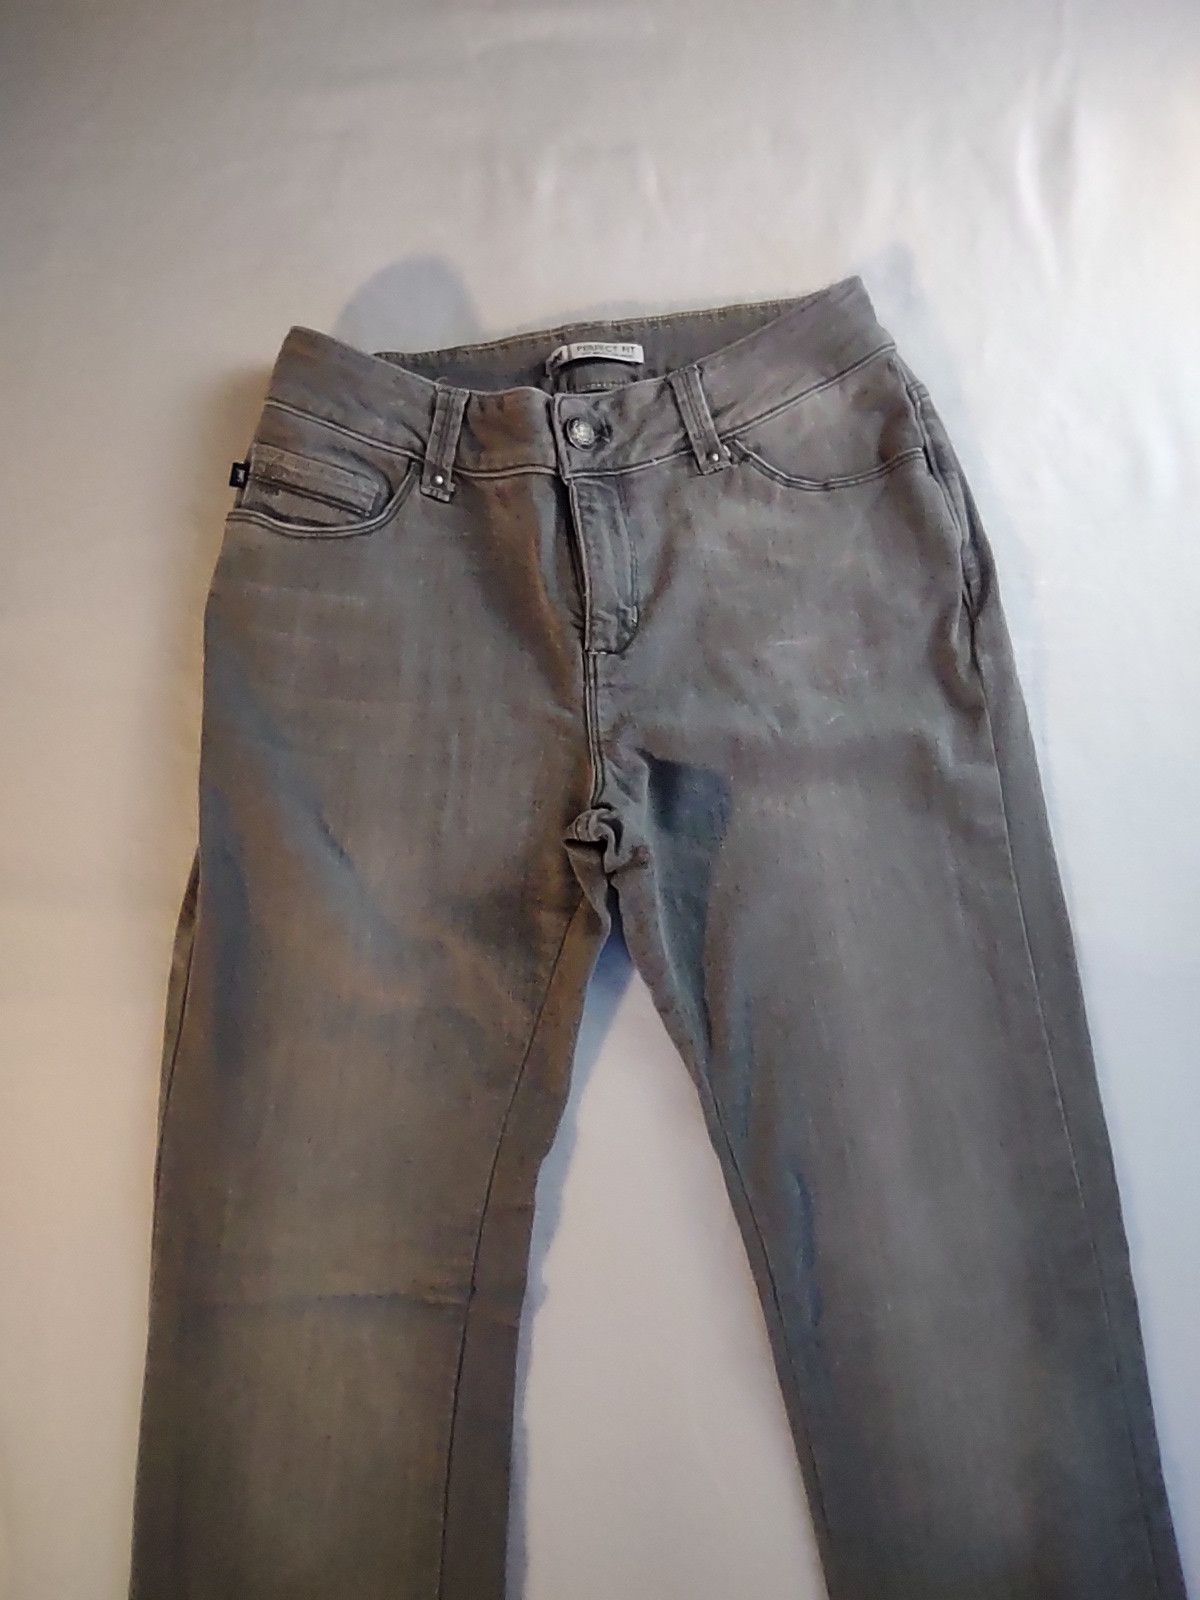 Lee Lee Perfect Fit Just Below Waist denim jeans gray ash wash Size 28" / US 6 / IT 42 - 1 Preview